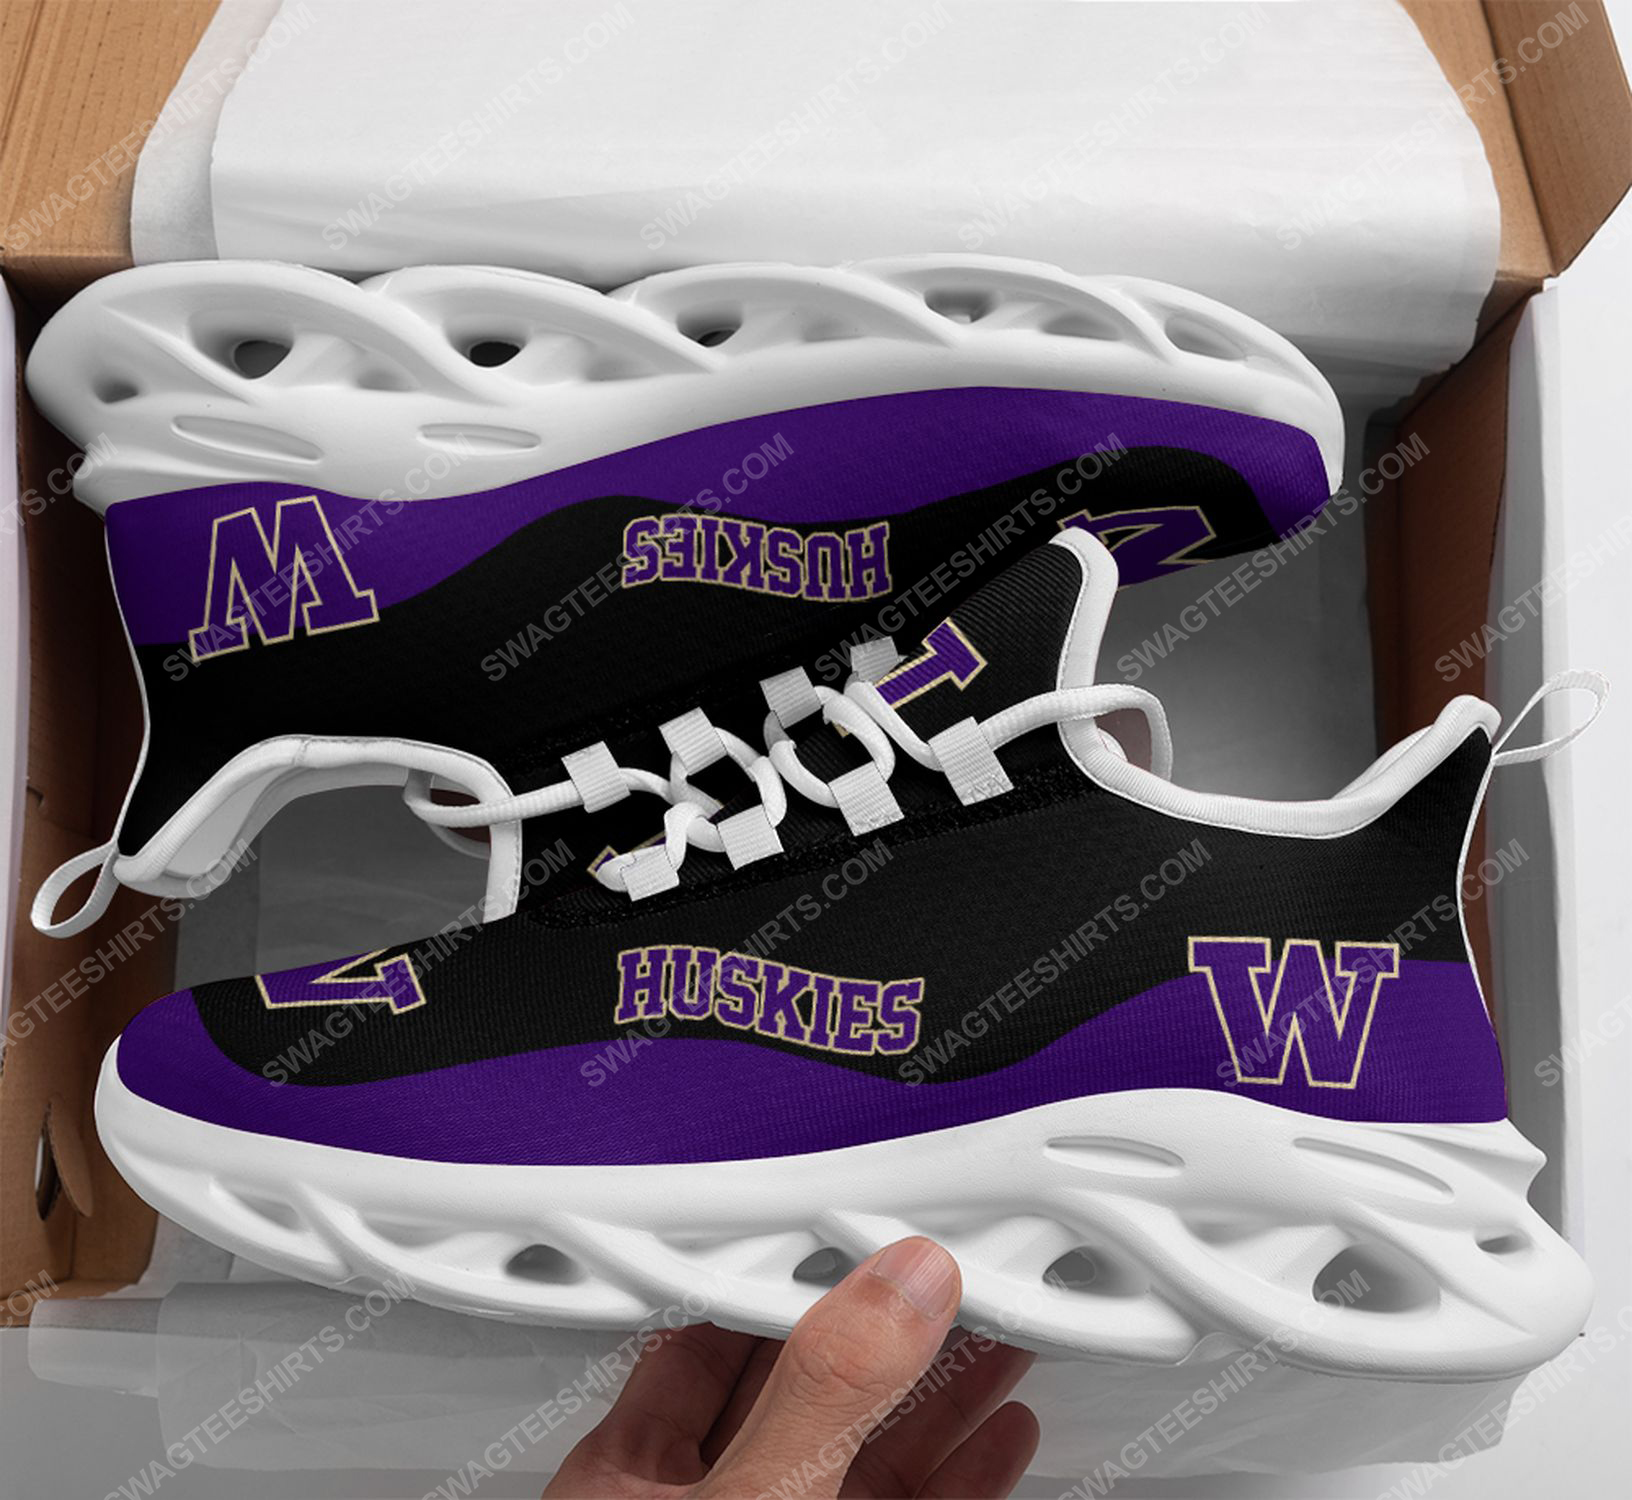 The washington huskies football team max soul shoes 1